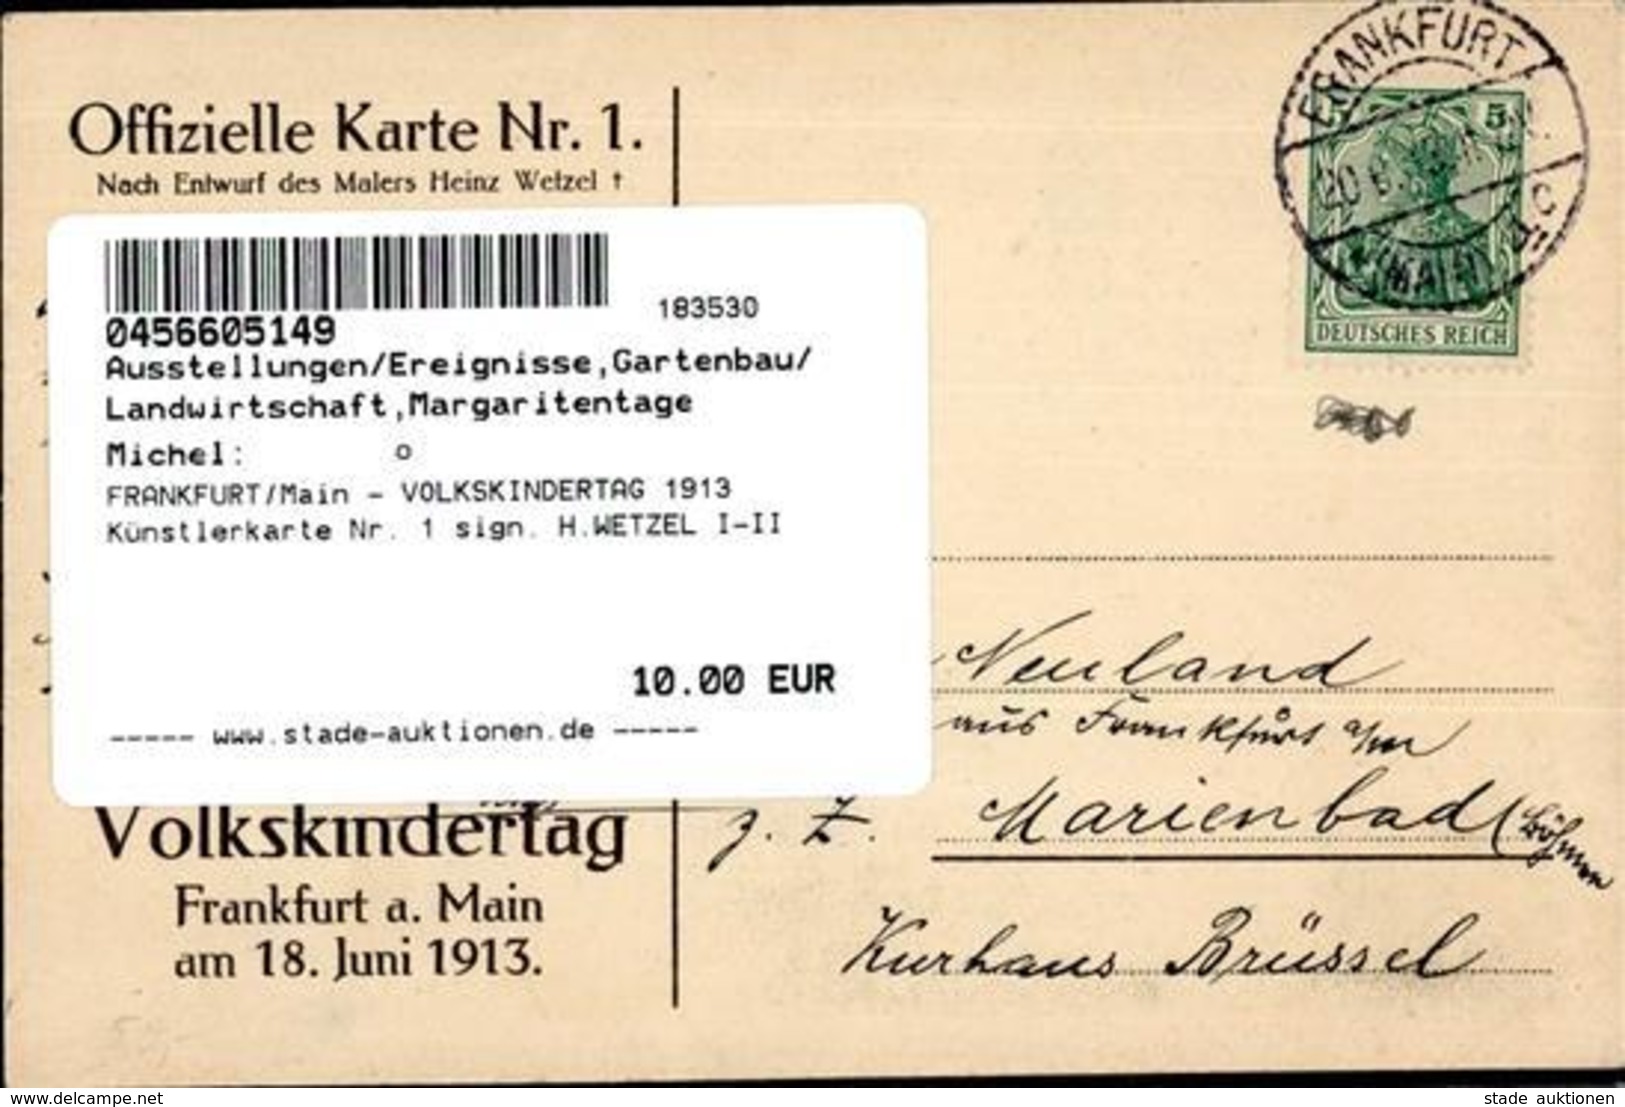 FRANKFURT/Main - VOLKSKINDERTAG 1913 Künstlerkarte Nr. 1 Sign. H.WETZEL I-II - Esposizioni